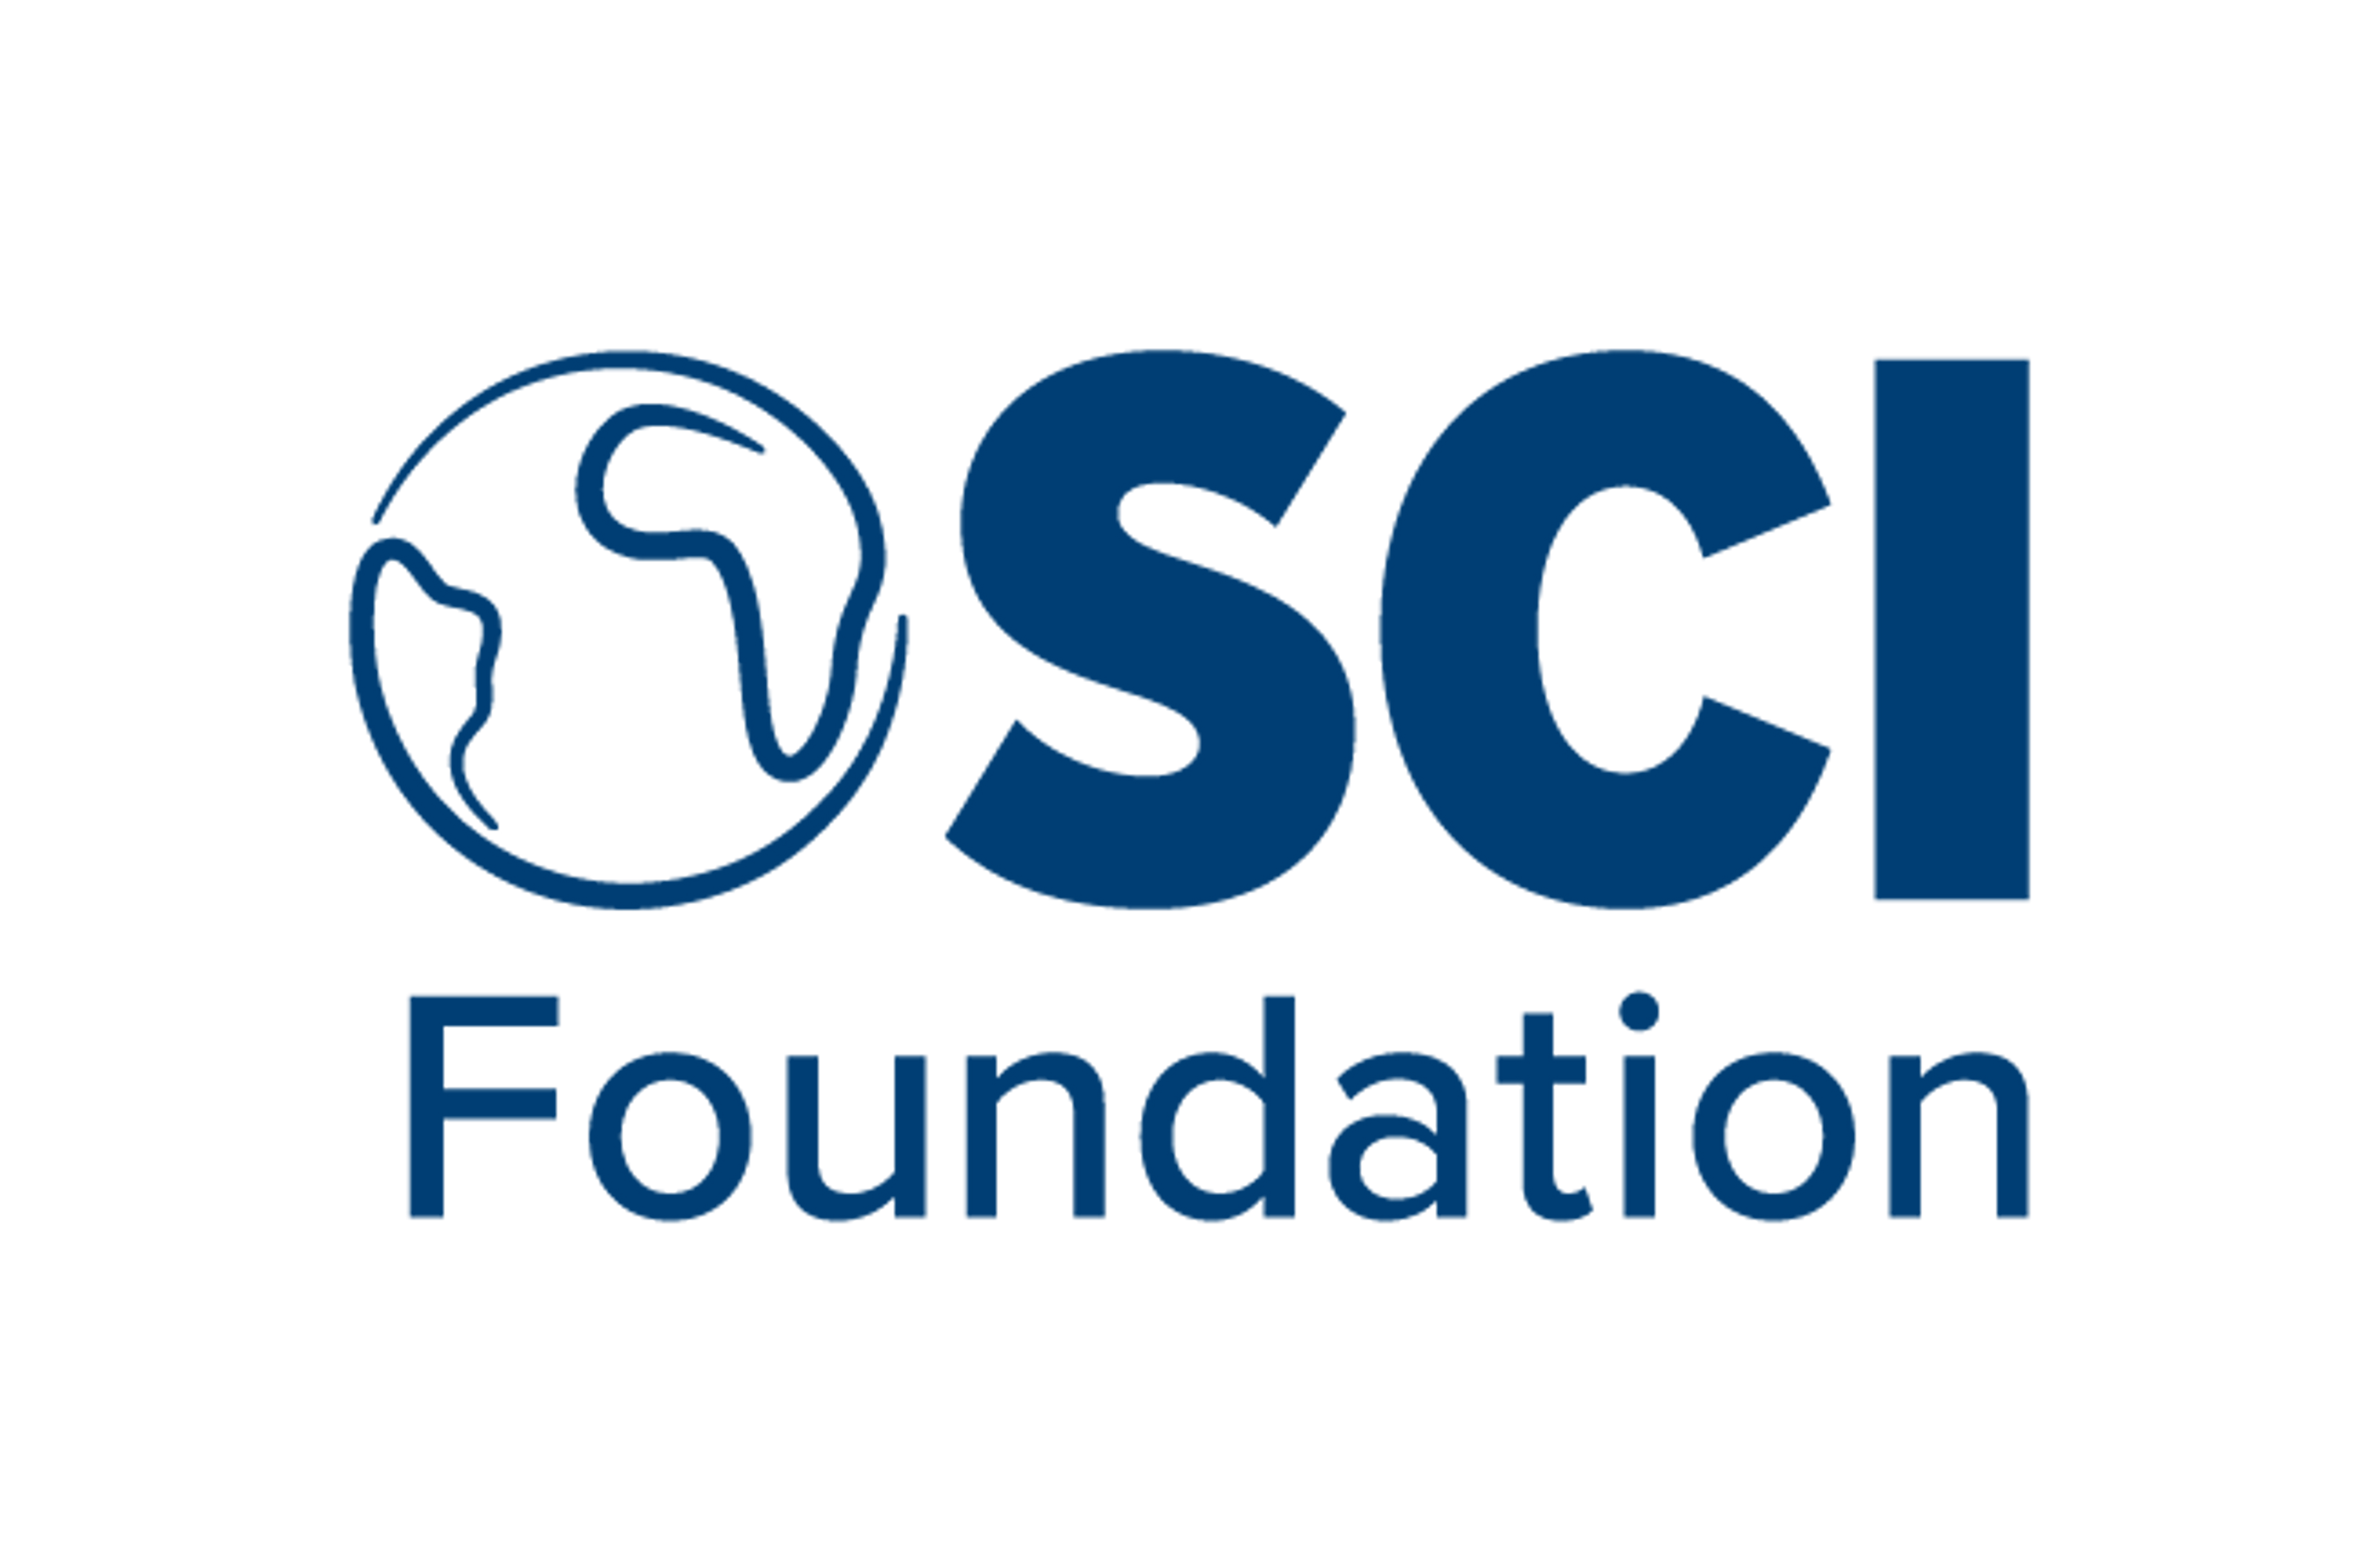 SCI Foundation